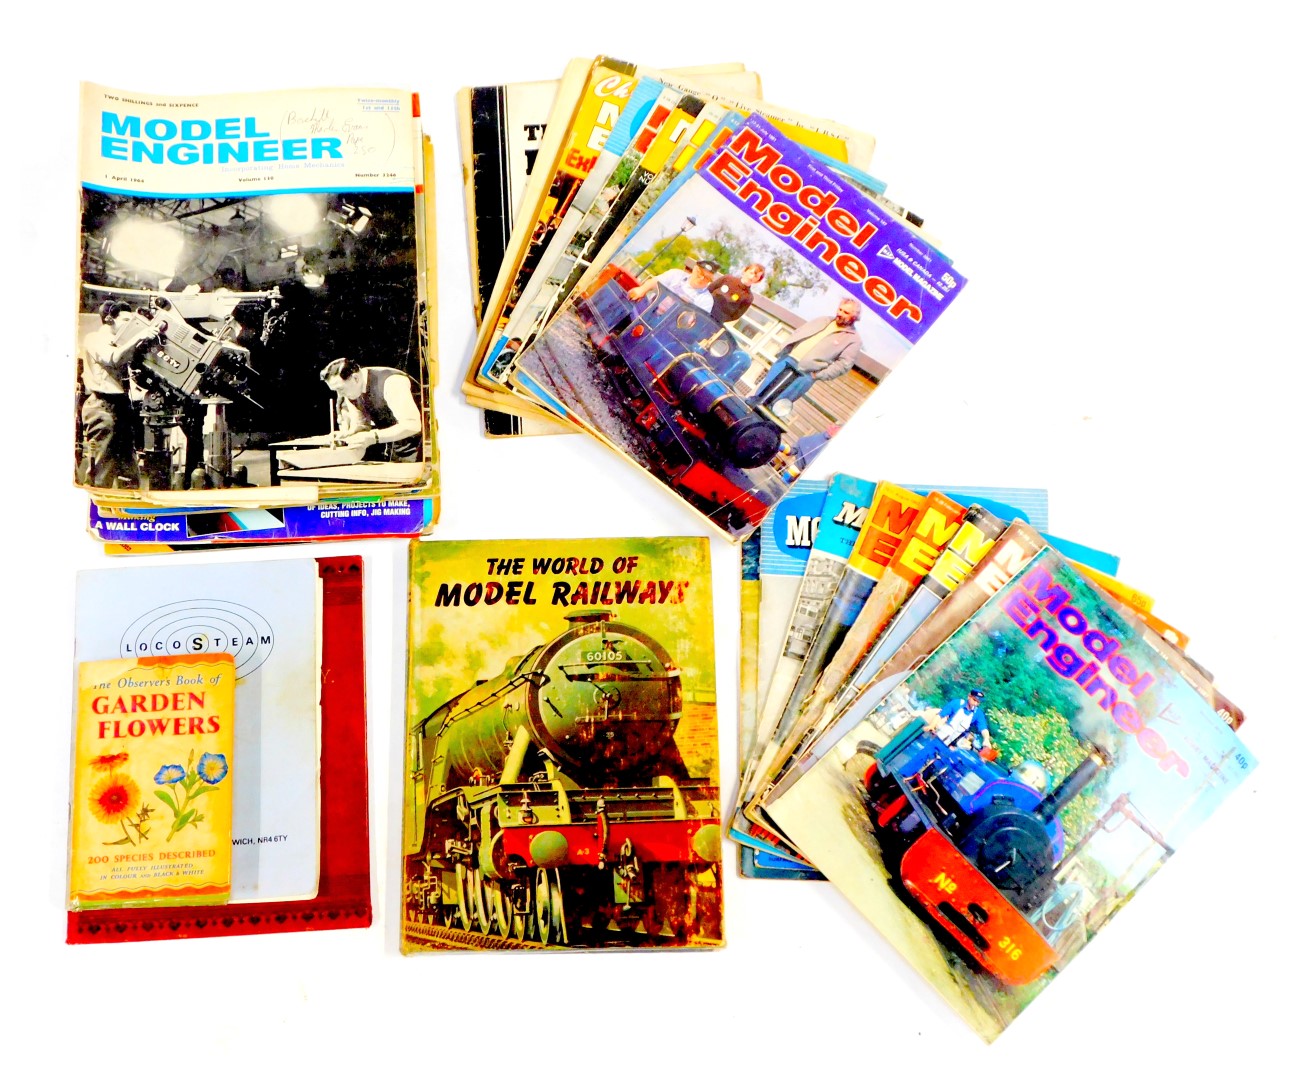 Books and magazines, Model Engineer Magazine, The World of Model Railway, Loco Steam Model Engineers